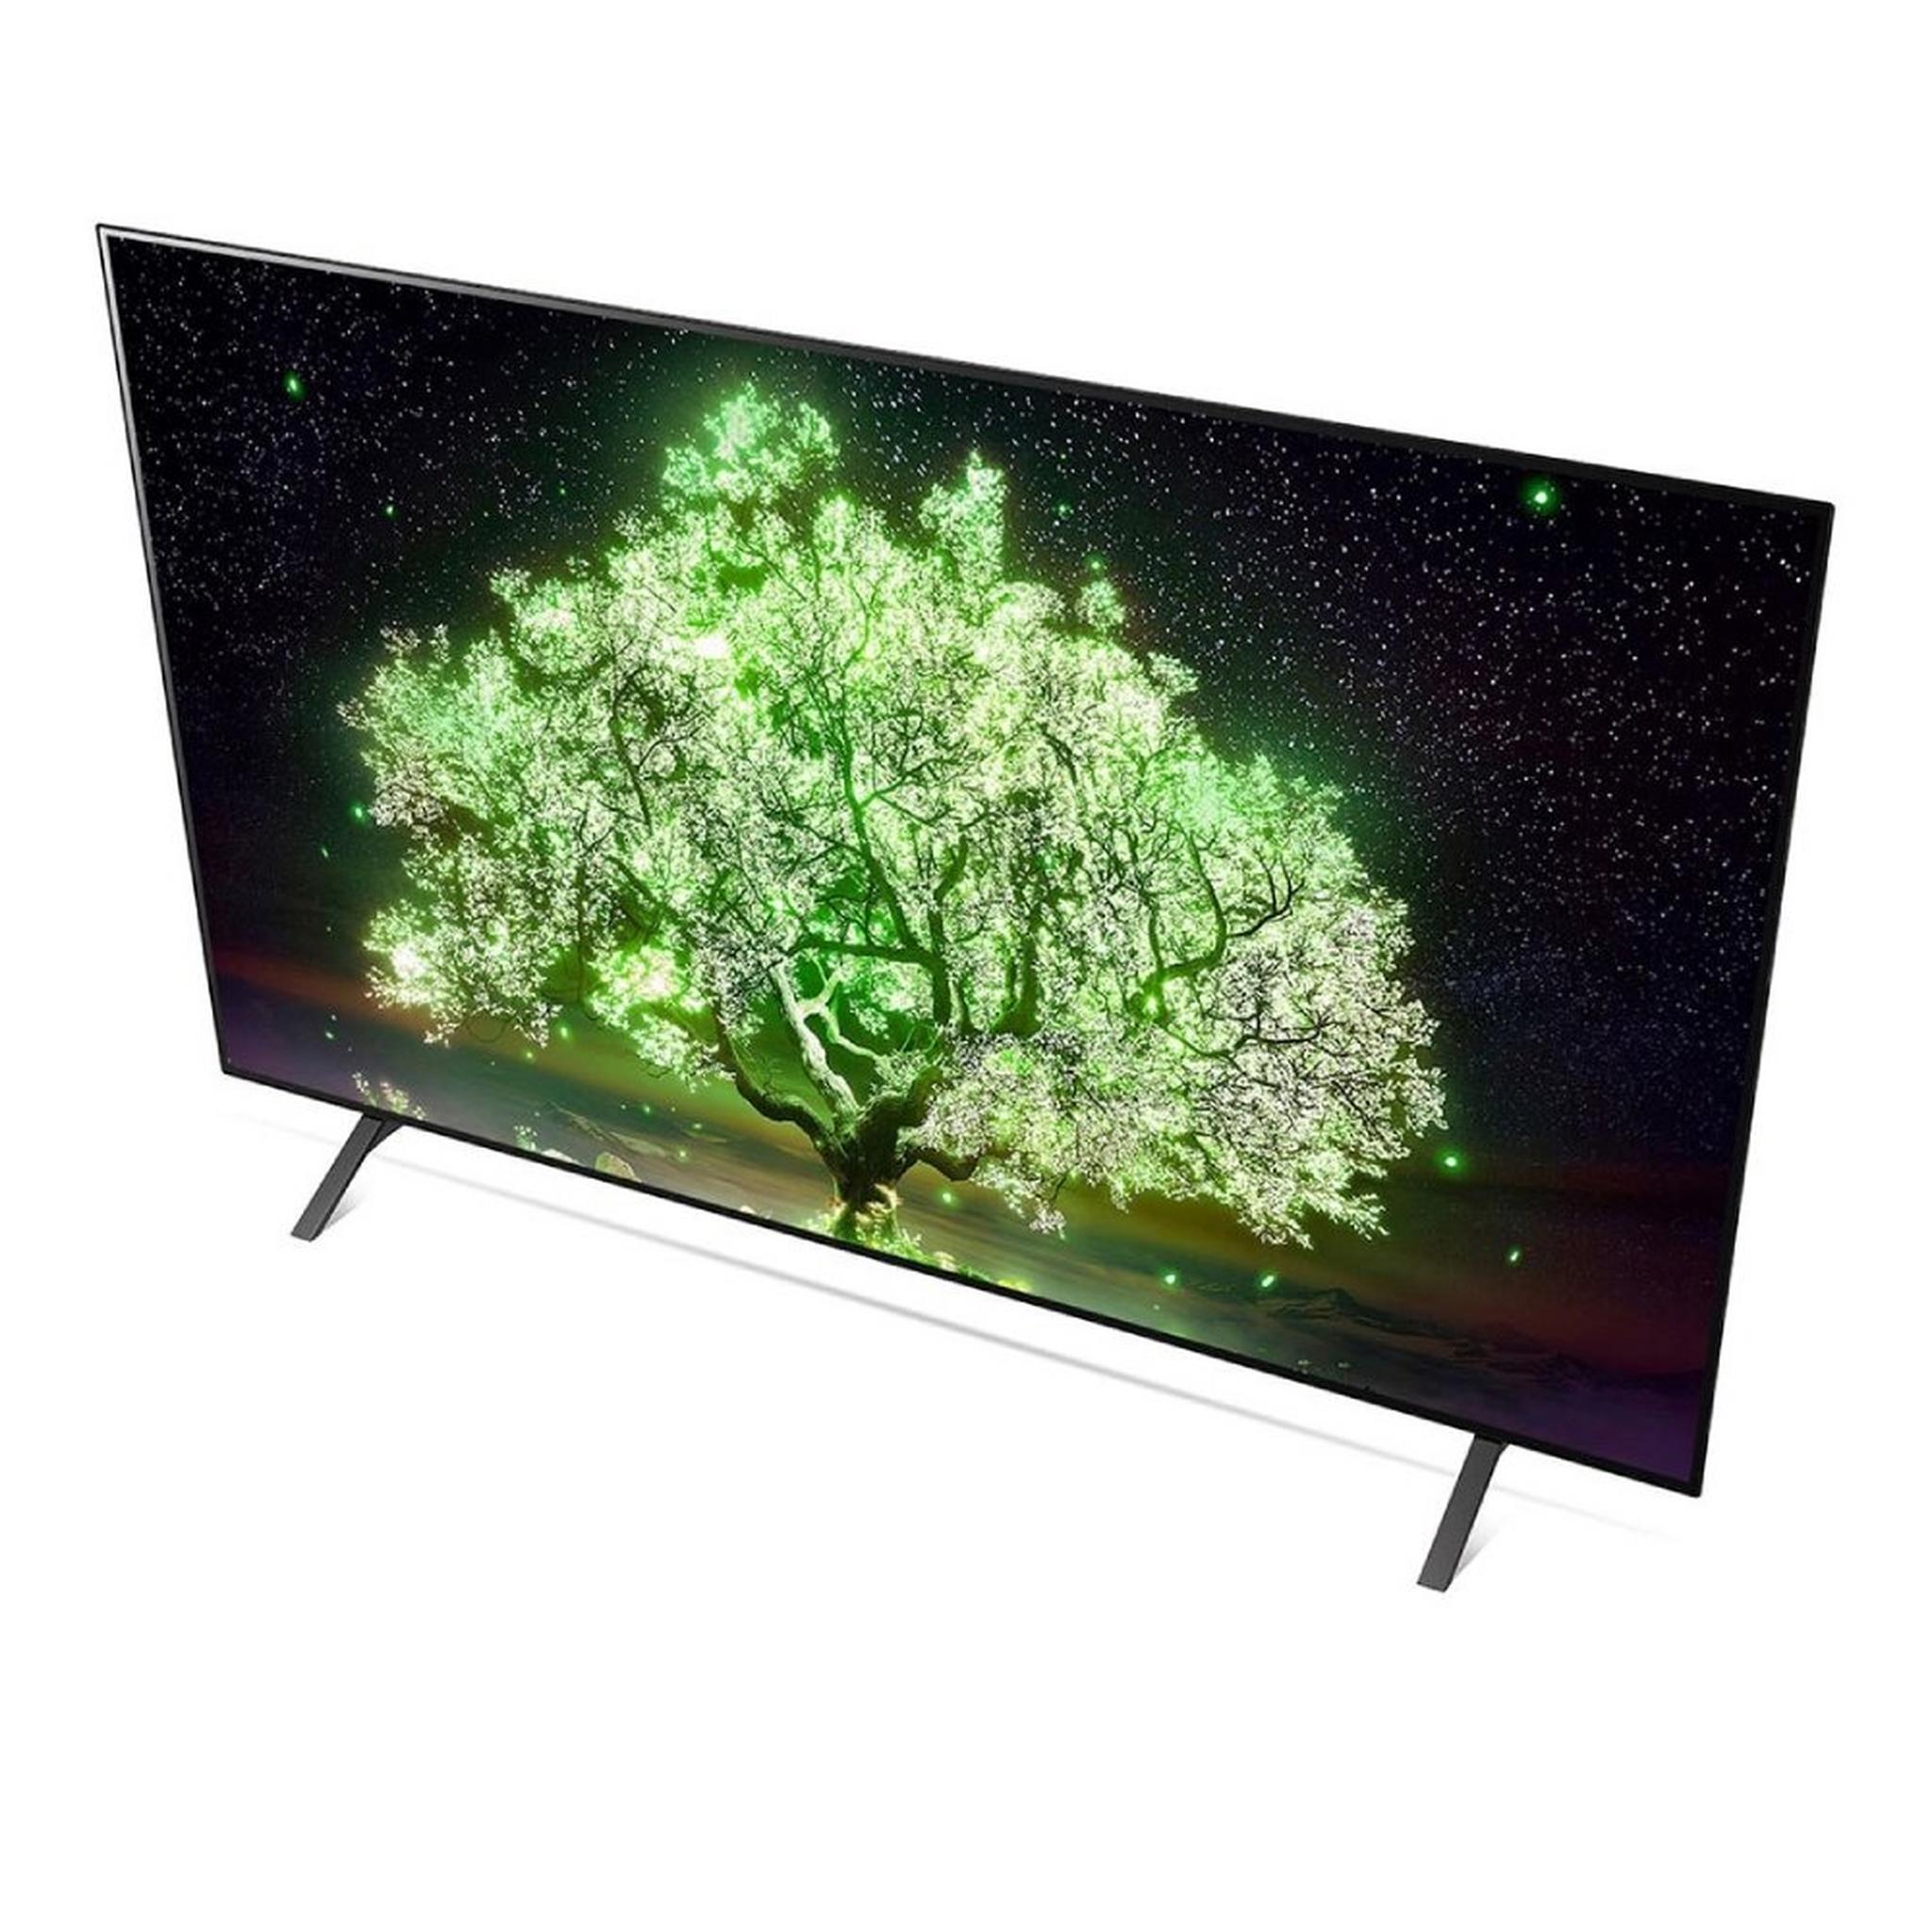 LG 65-Inches OLED Smart TV (OLED65A1)